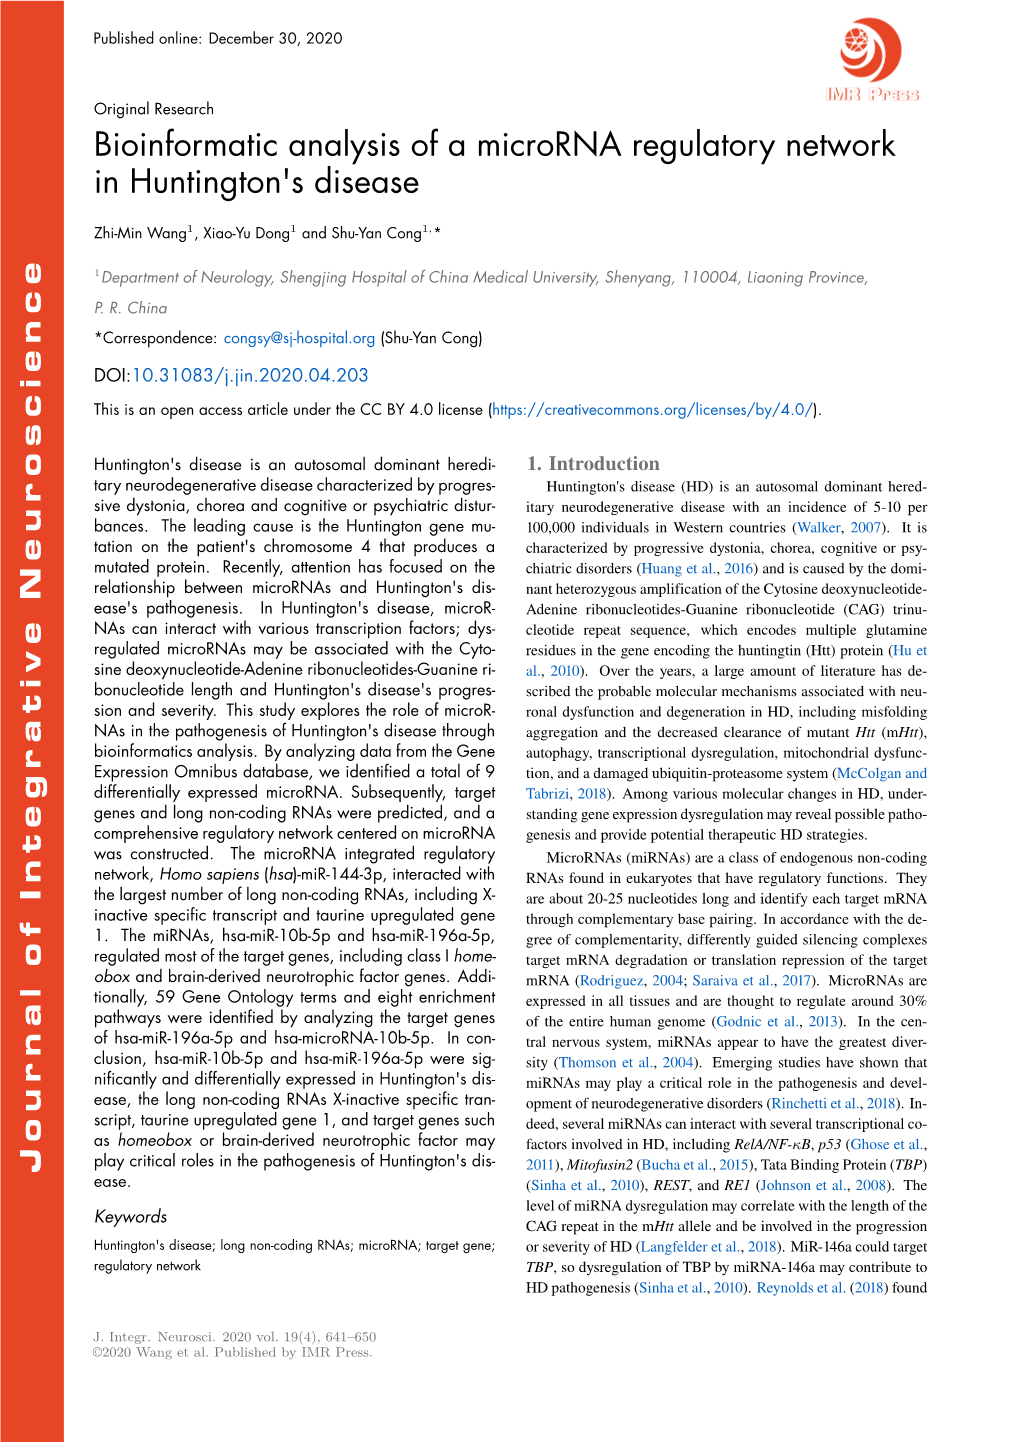 Bioinformatic Analysis of a Microrna Regulatory Network in Huntington's Disease